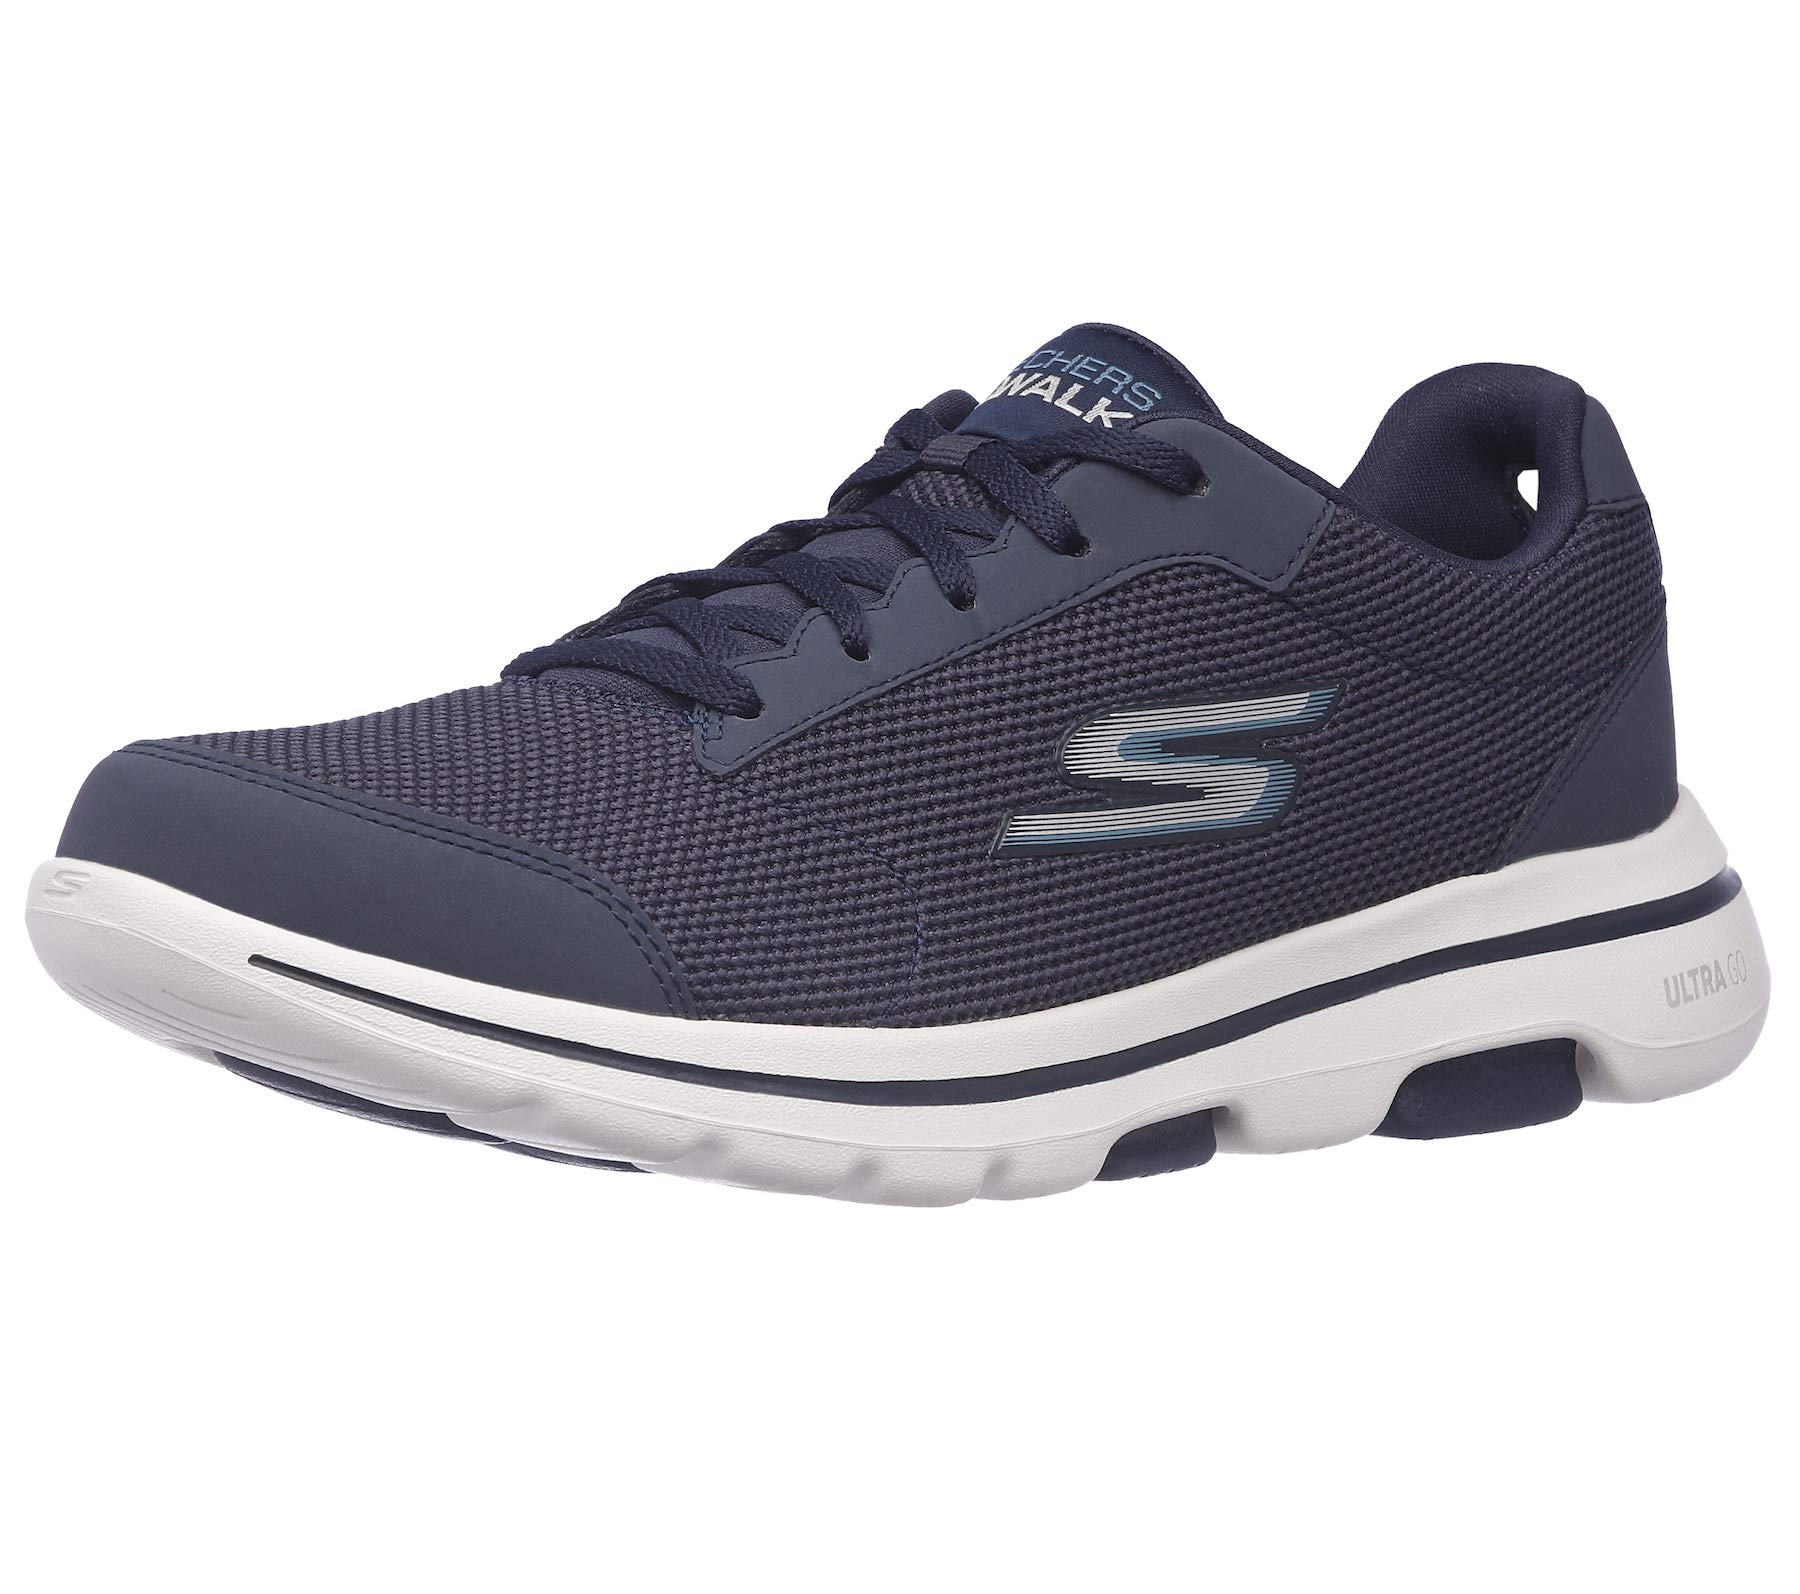 Skechers Mens gowalk 5 Qualify-Athletic Mesh Lace Up Performance Walking Shoe Sneaker, NavyBlue, 7 X-Wide